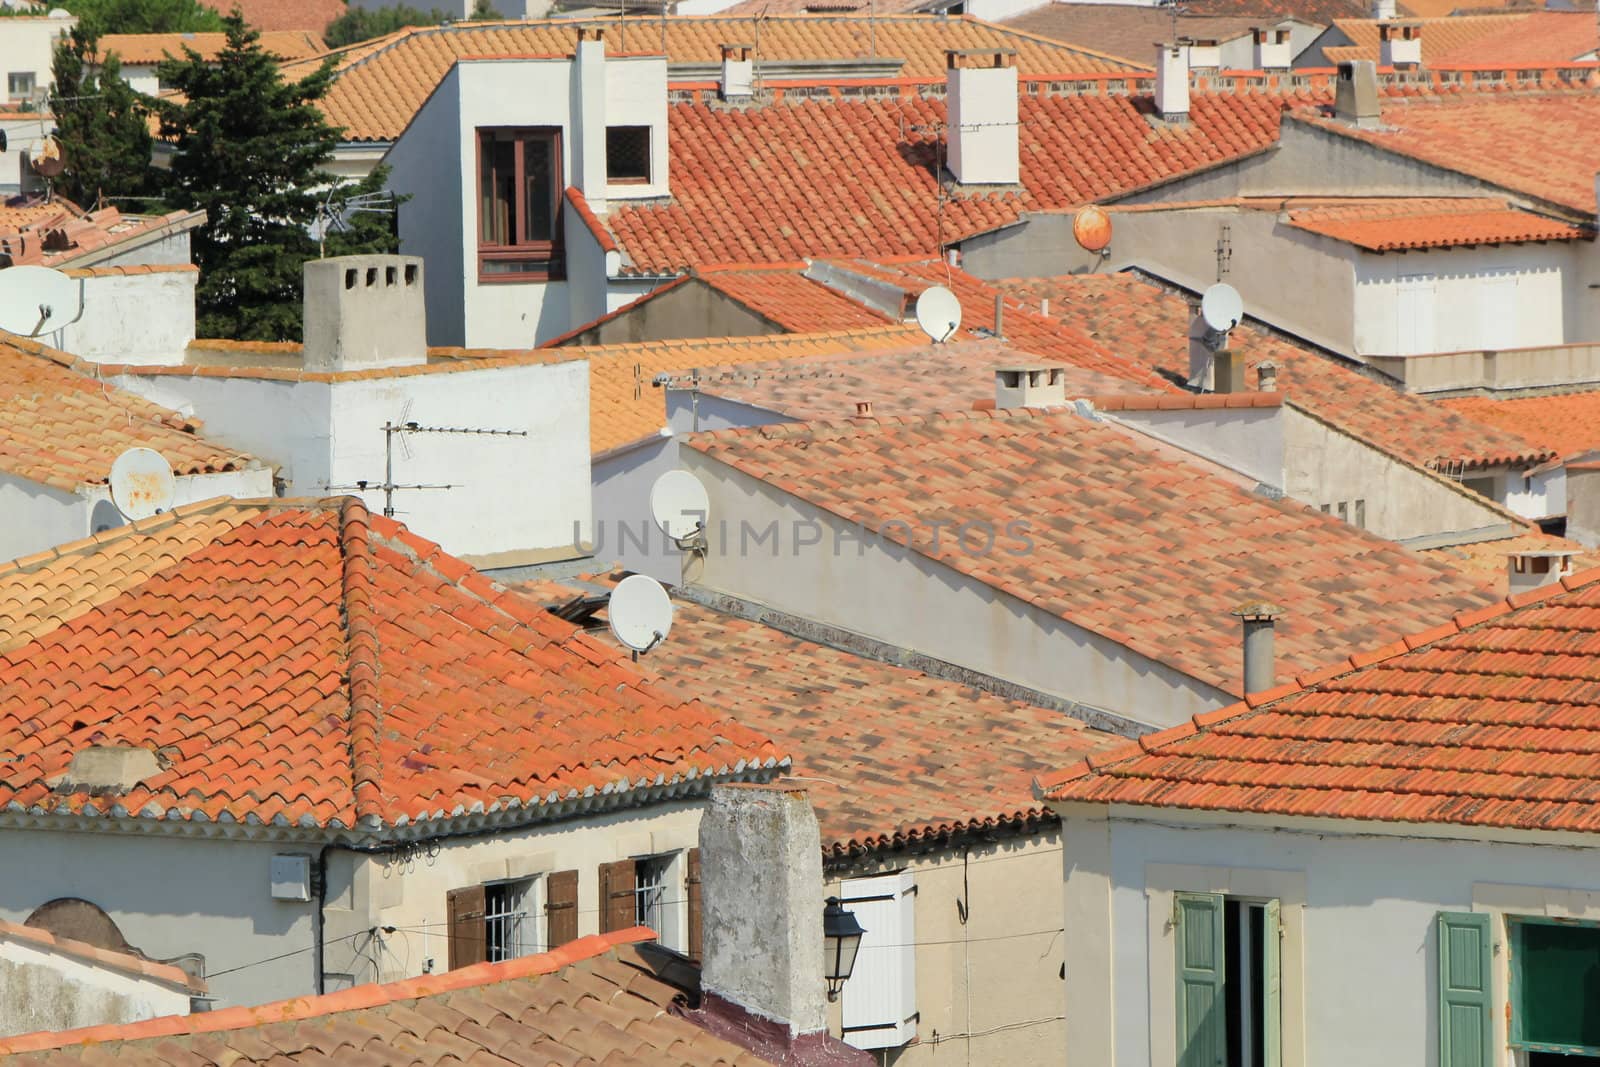 Roofs at Saintes-Maries-de-la-mer, Camargue, France by Elenaphotos21